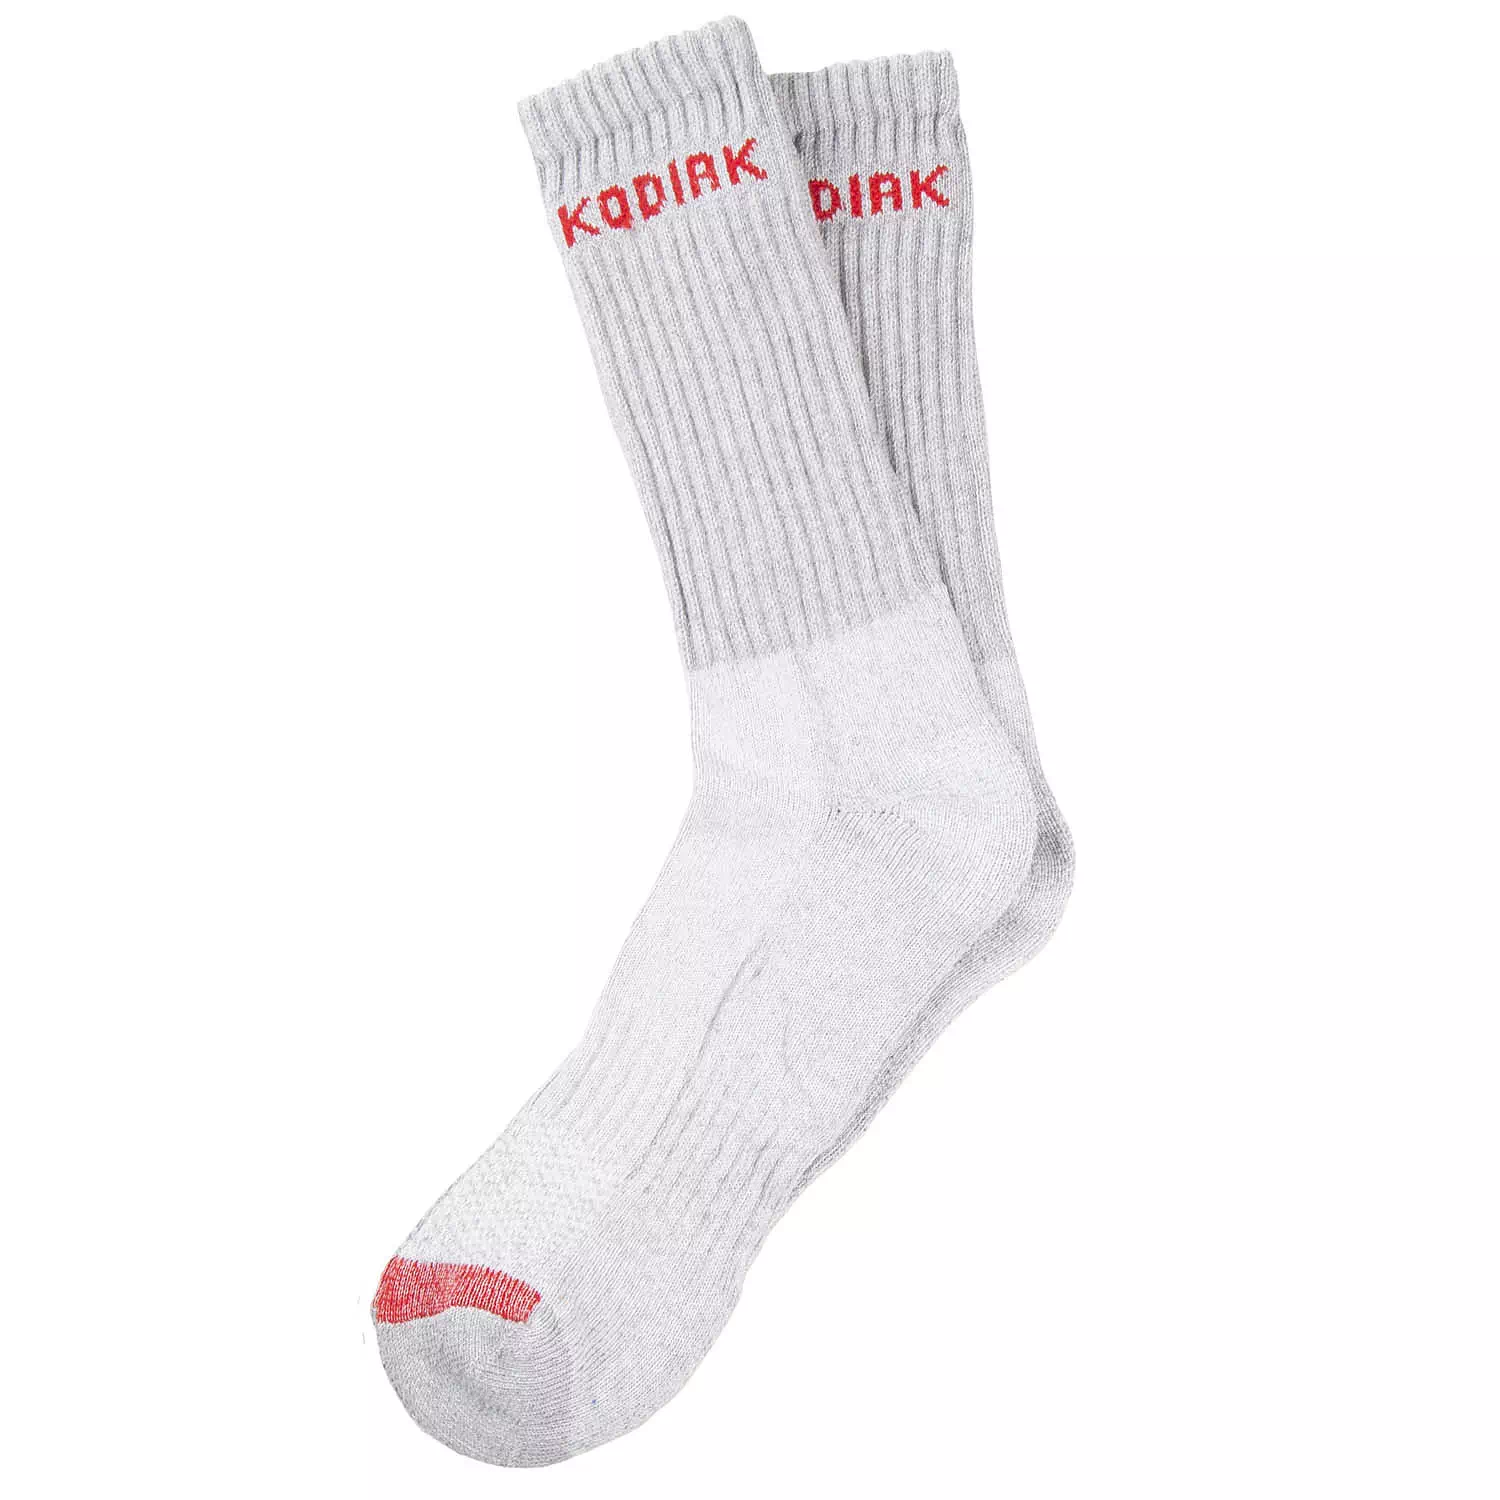 Kodiak - Work safety socks, pk. of 2. Colour: grey. Size: 7-12